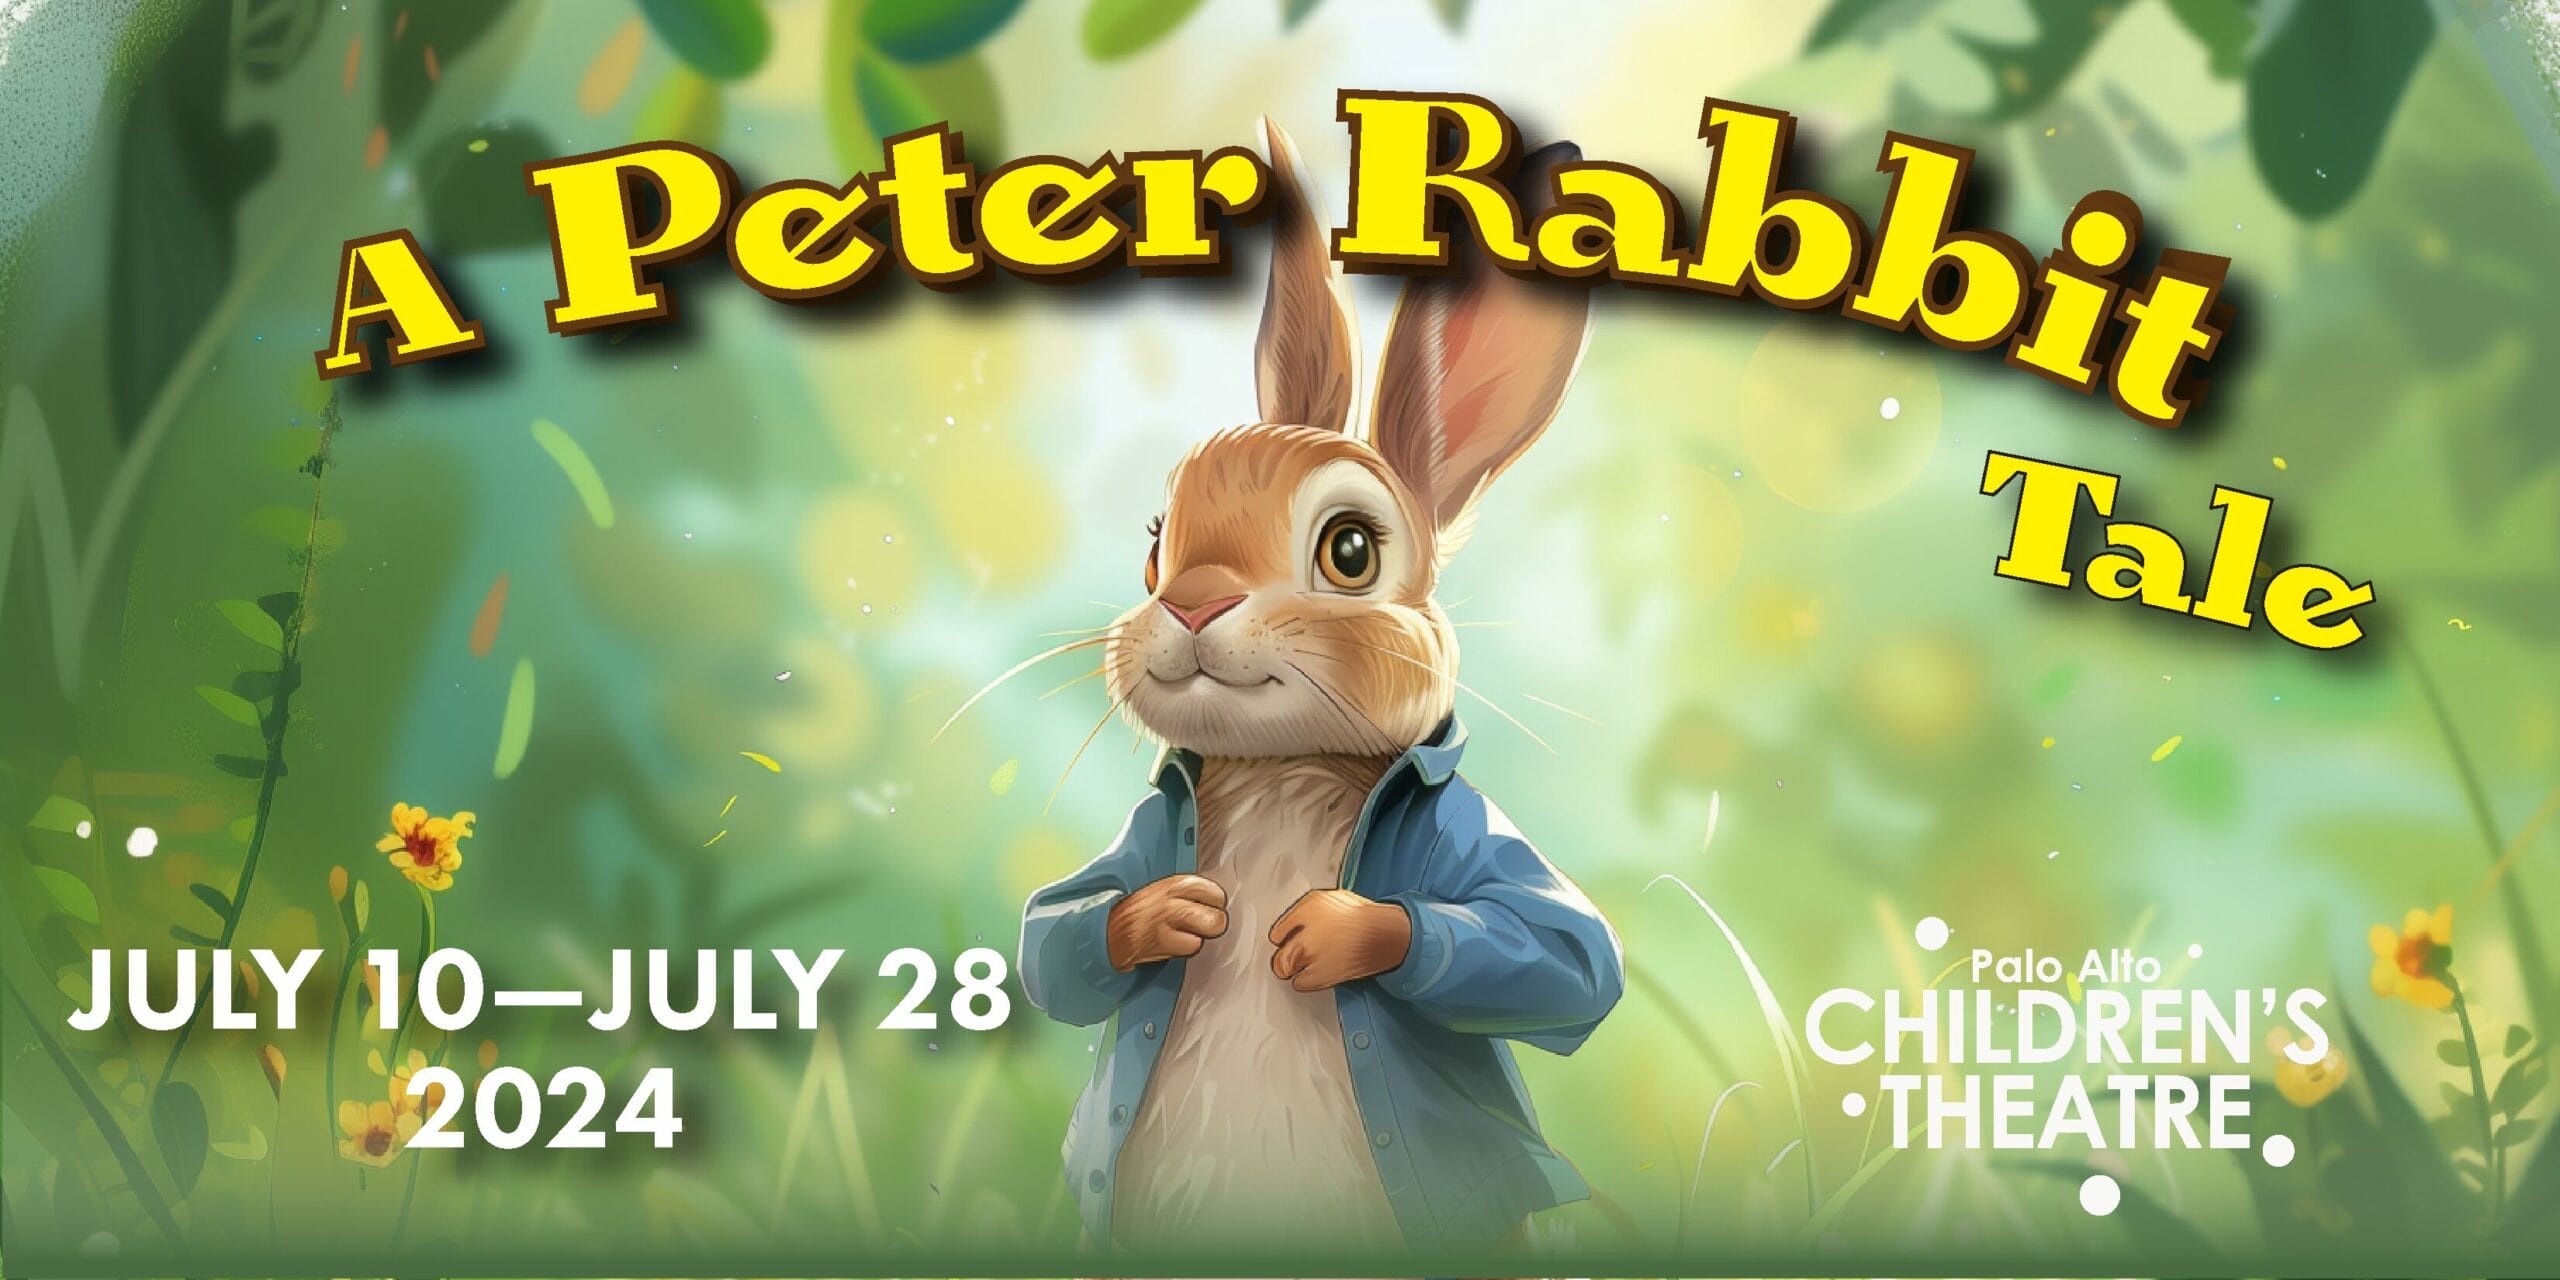 Palo Alto Children's Theater presents A Peter Rabbit Tale